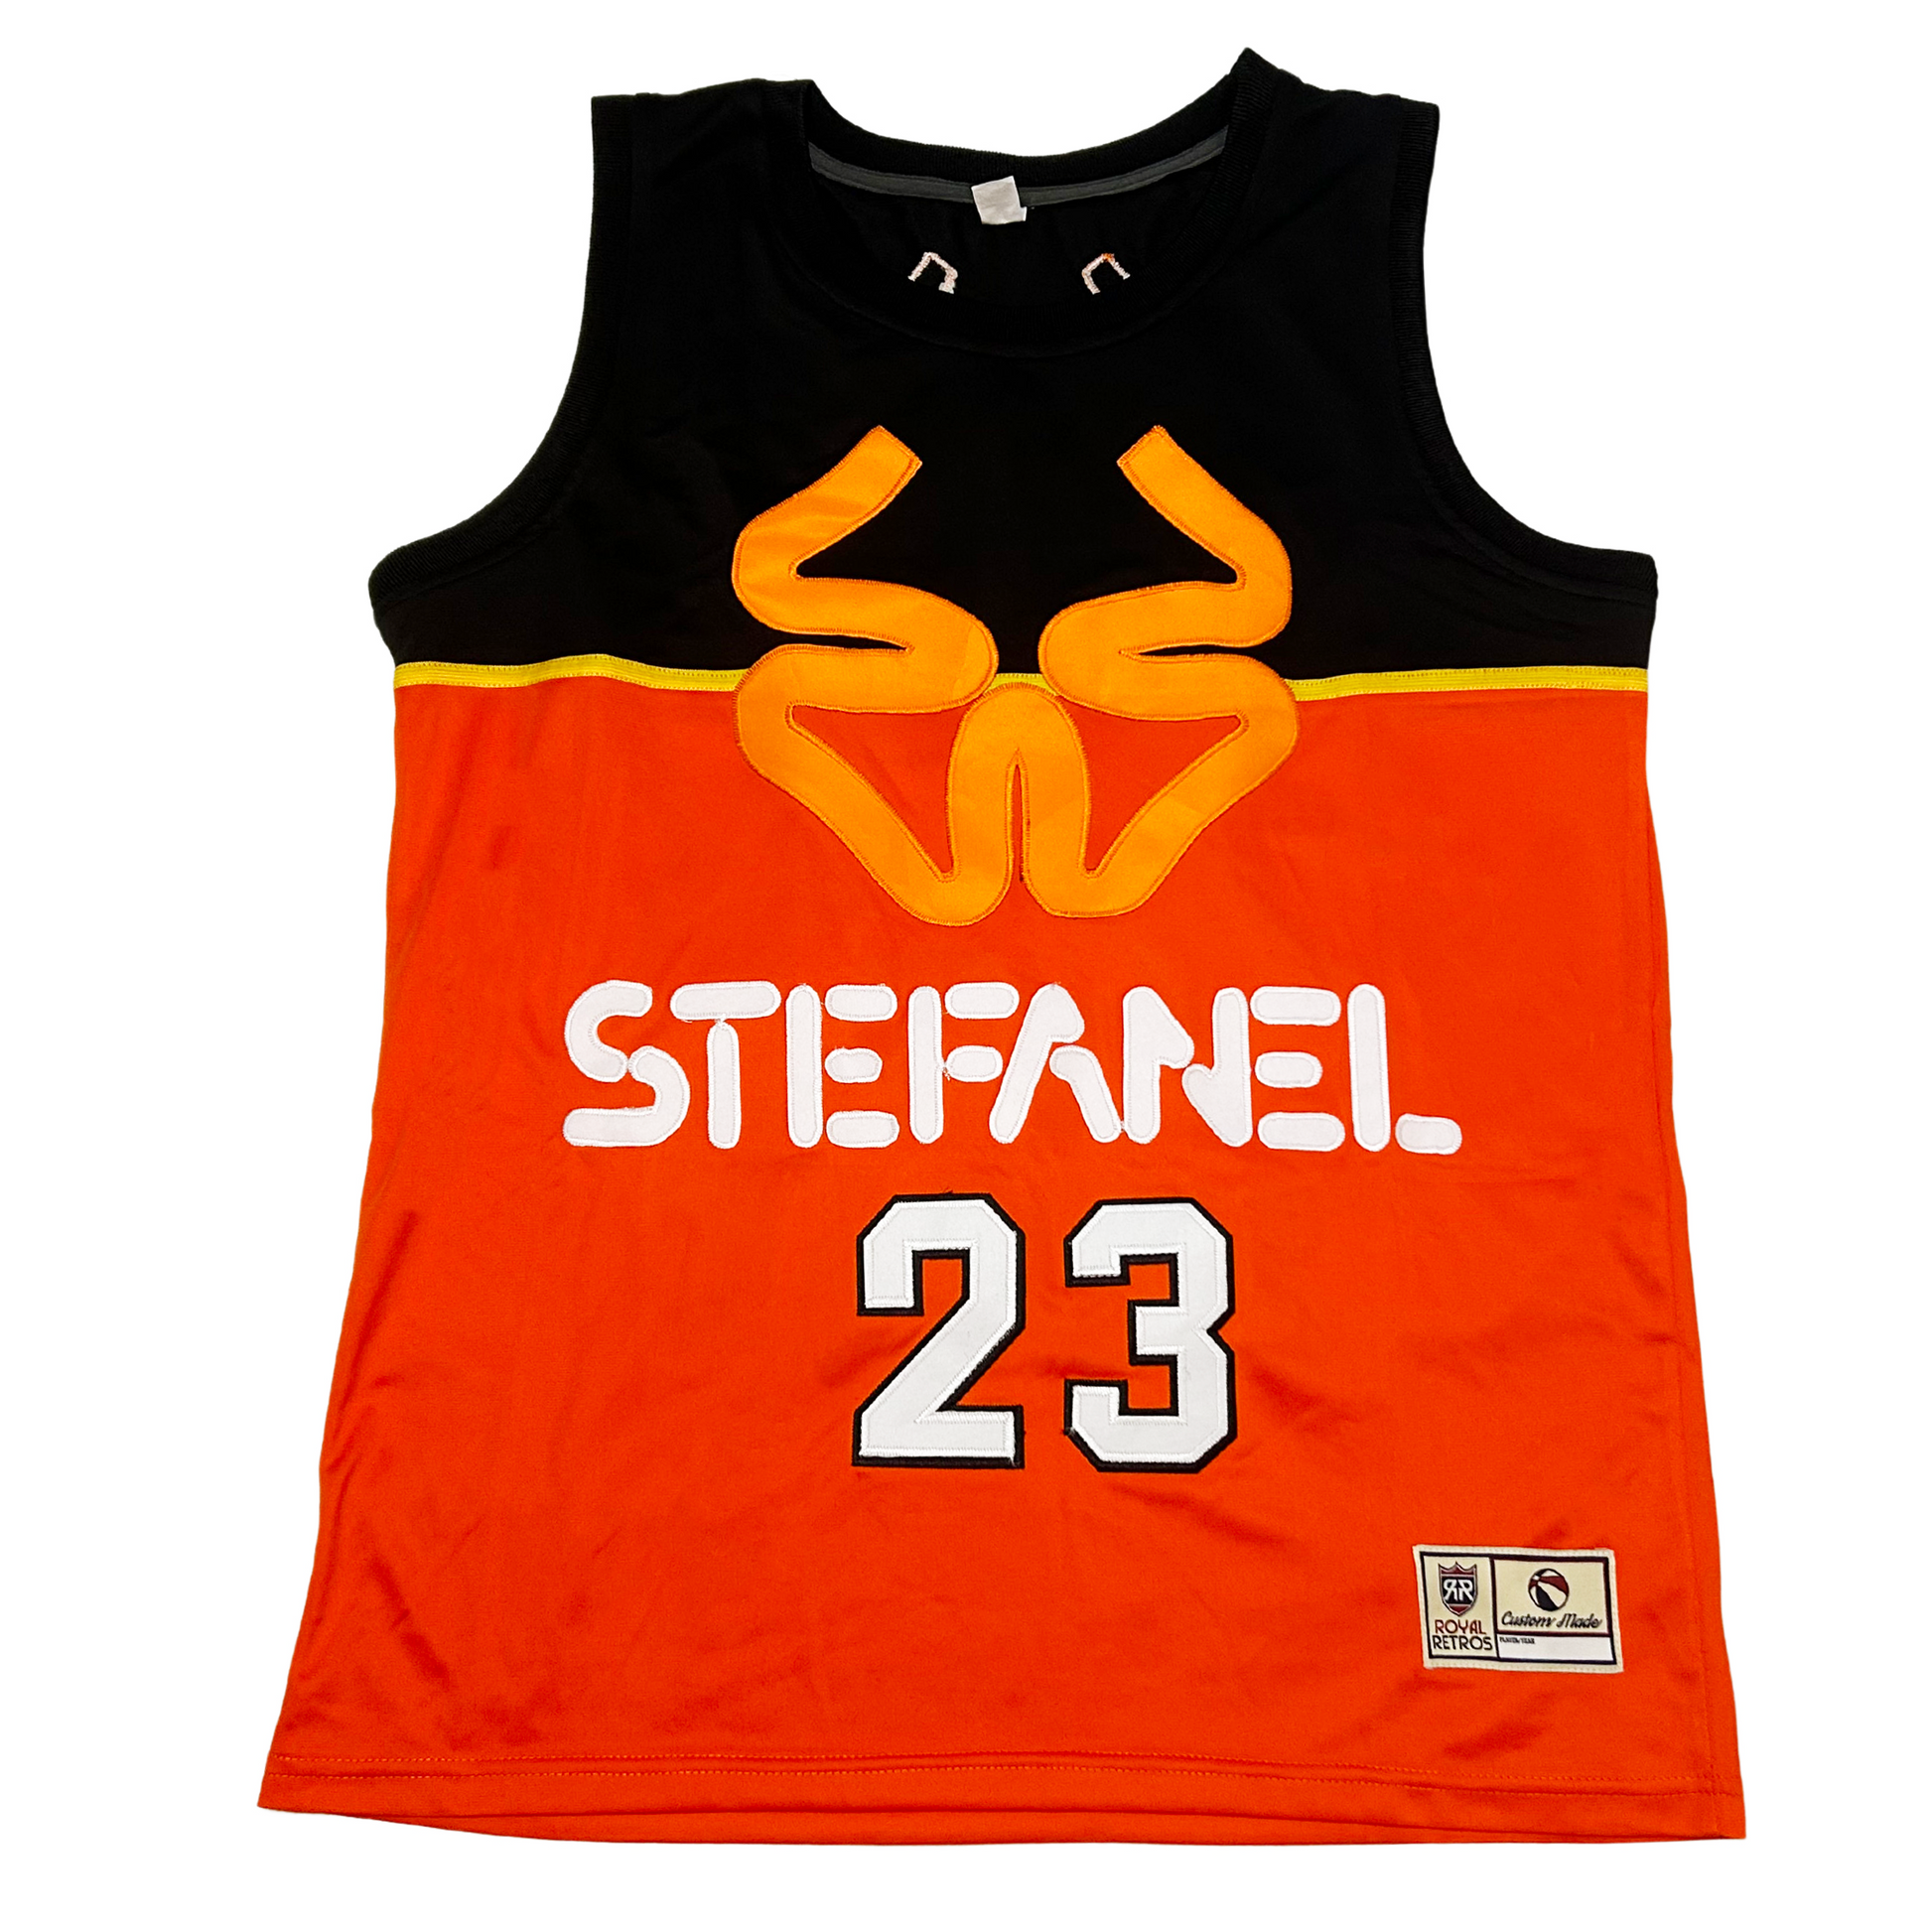 Stefanel Trieste Jersey #23. Black on top, orange bottom. Front view Royal Retros